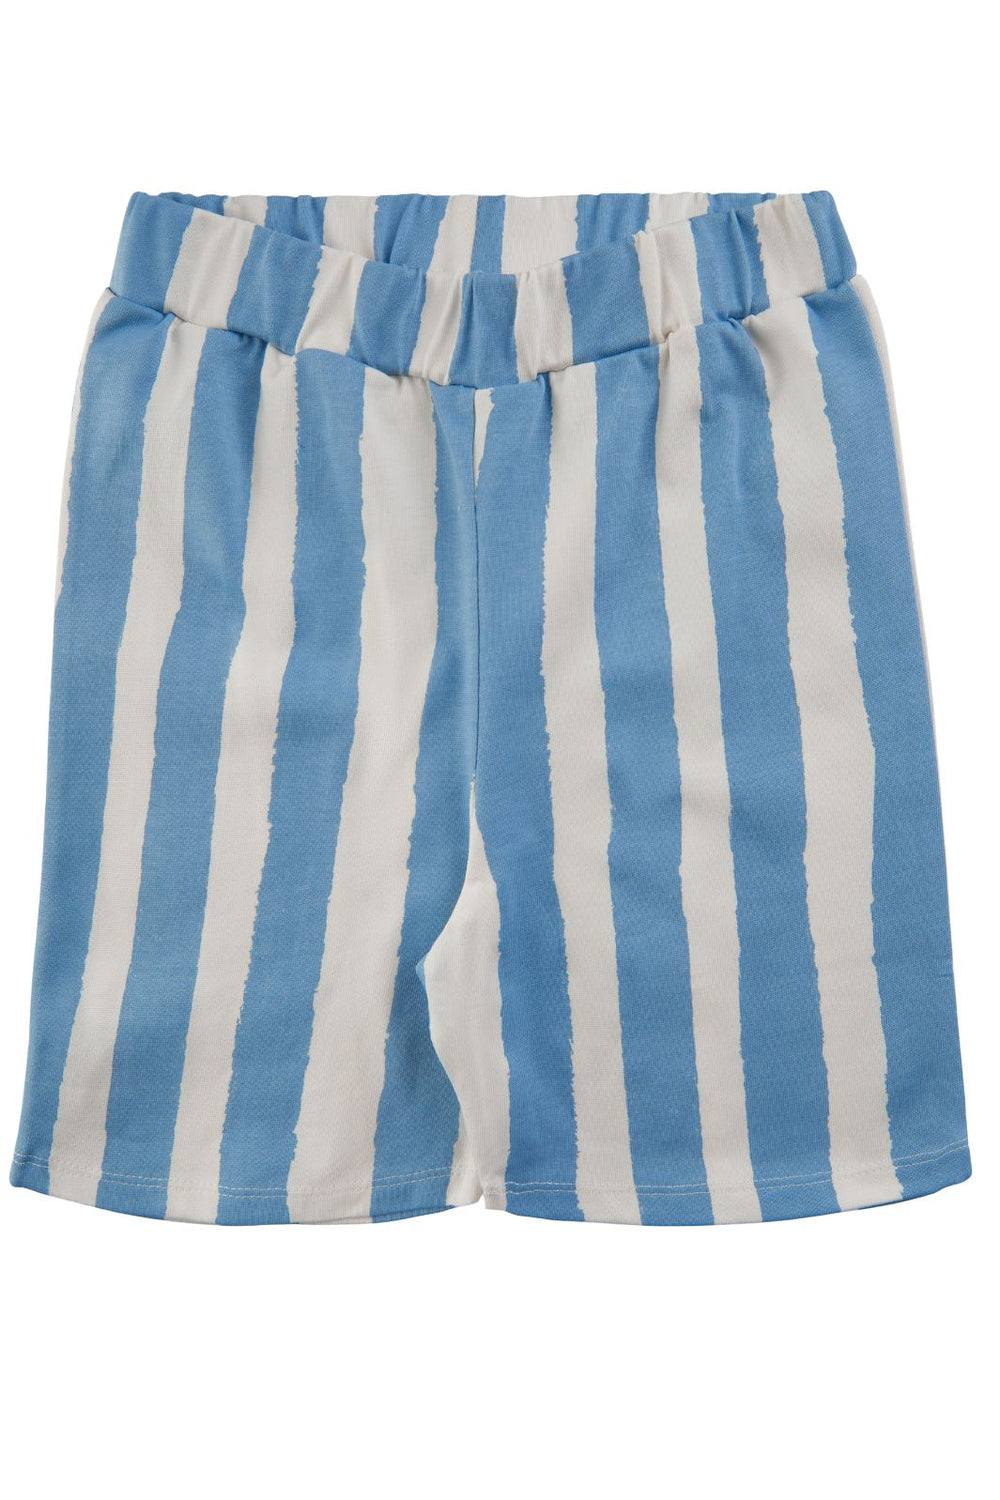 Soft Gallery - SGJordan Stripes shorts - Gardenia Shorts 